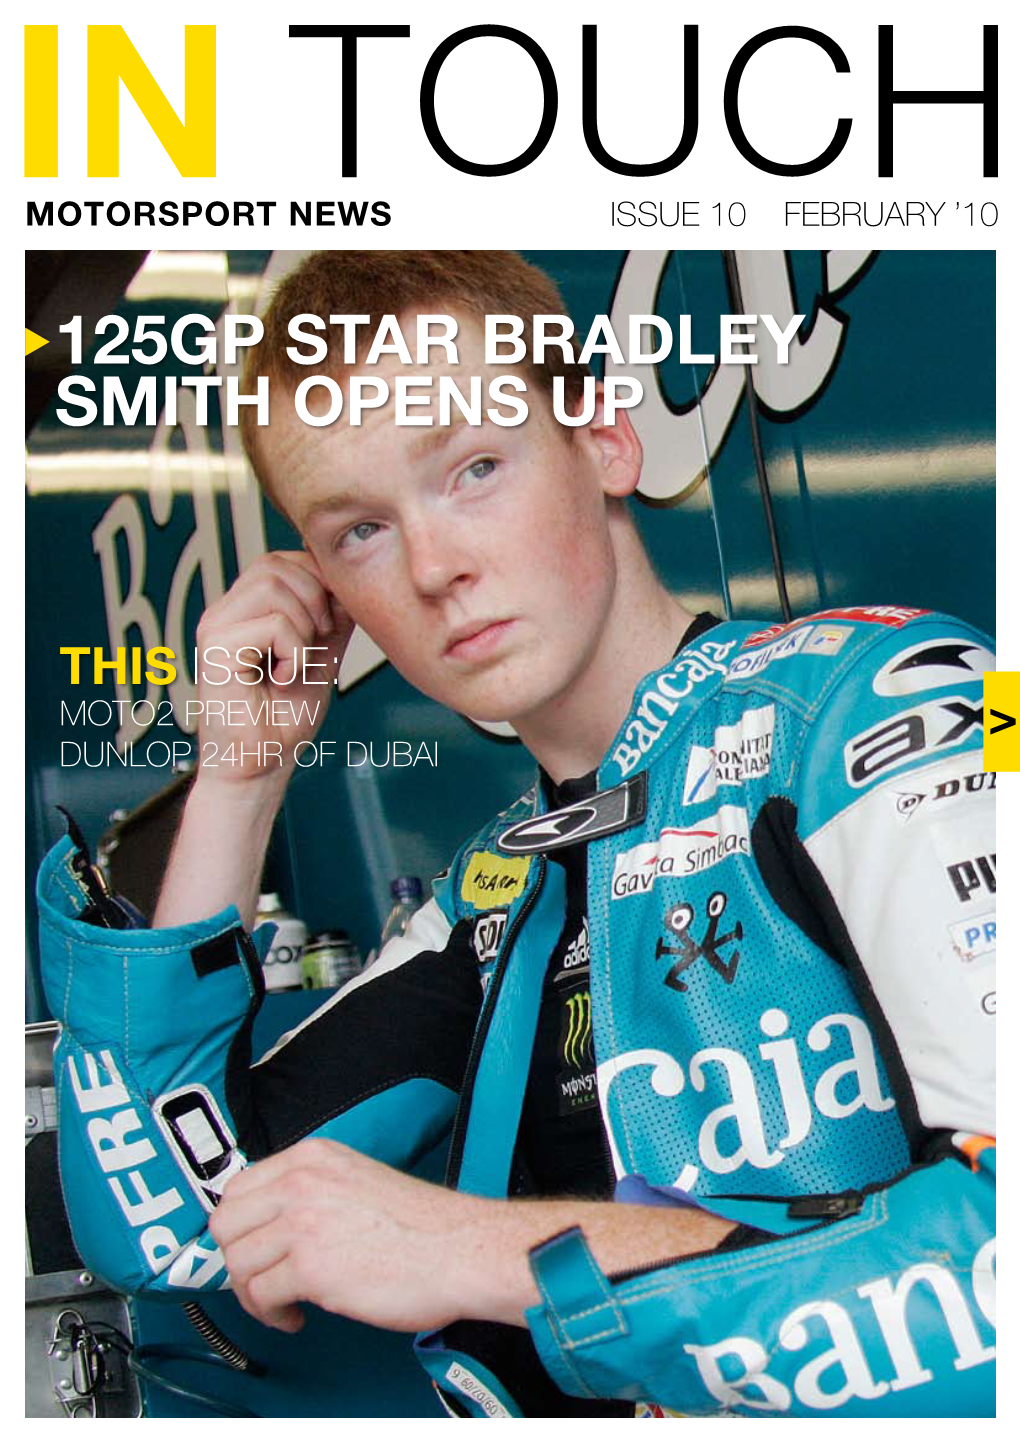 Motorsport News Issue 10 February ’10